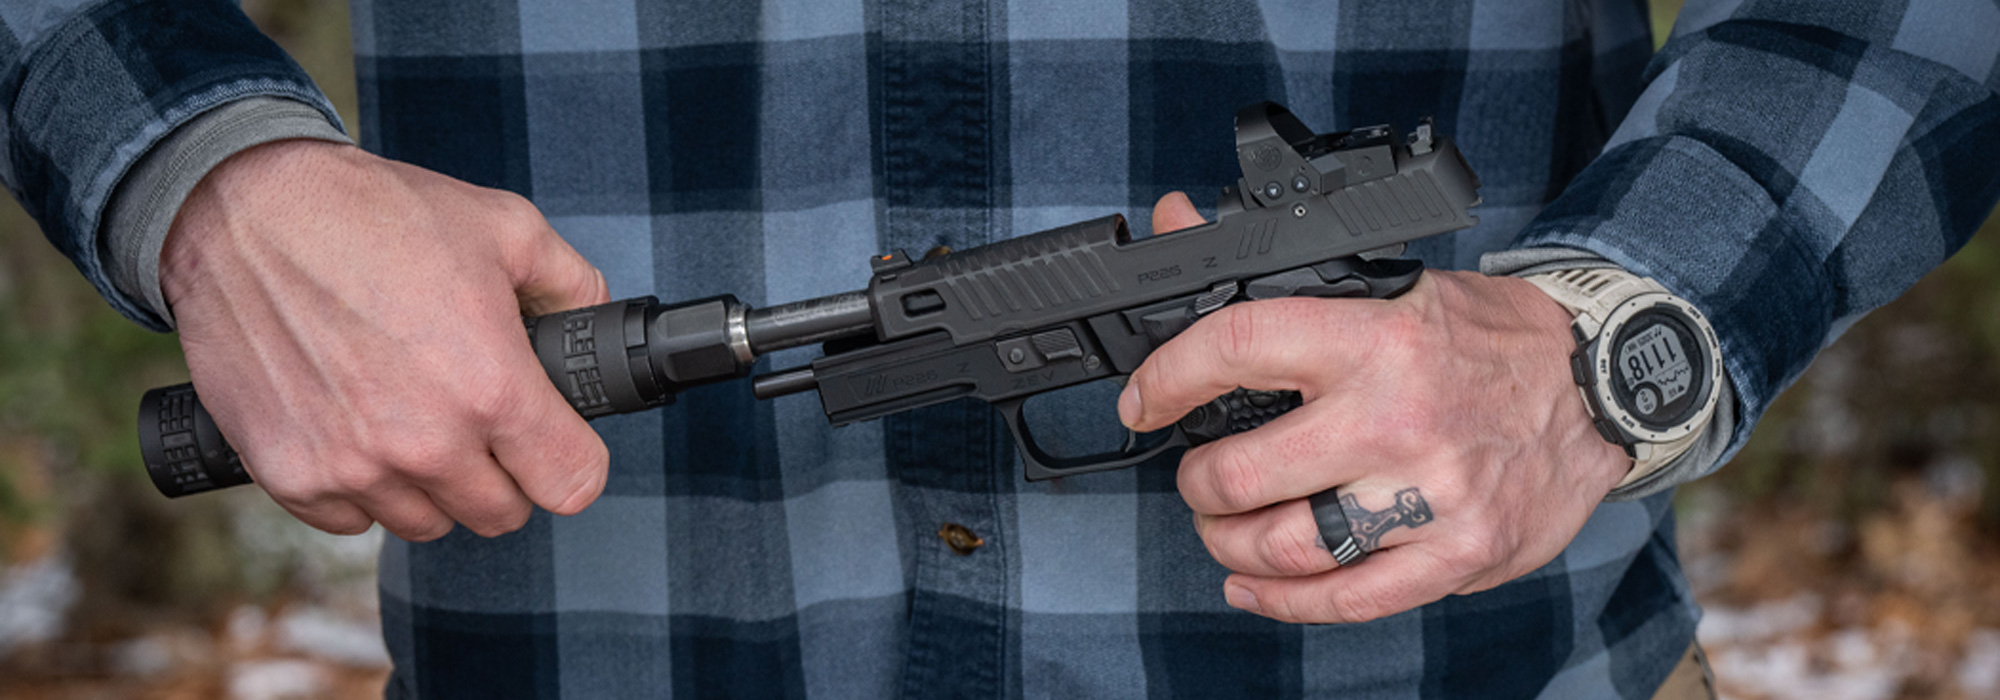 SIG SAUER P226 pistol and optics mounted additional slide.